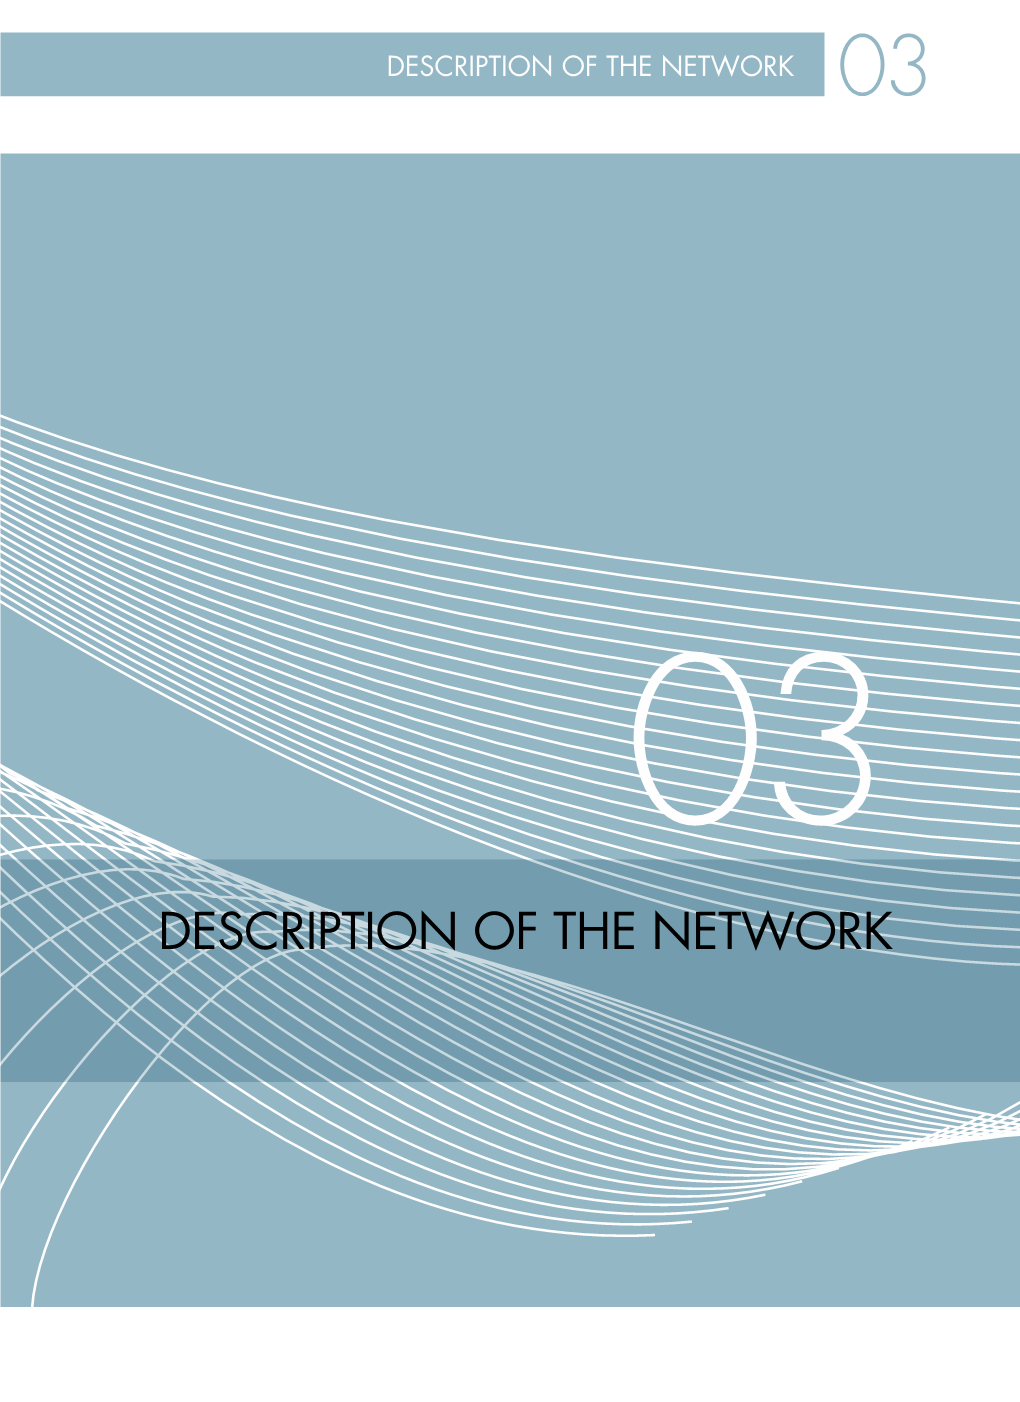 Description of the Network 03